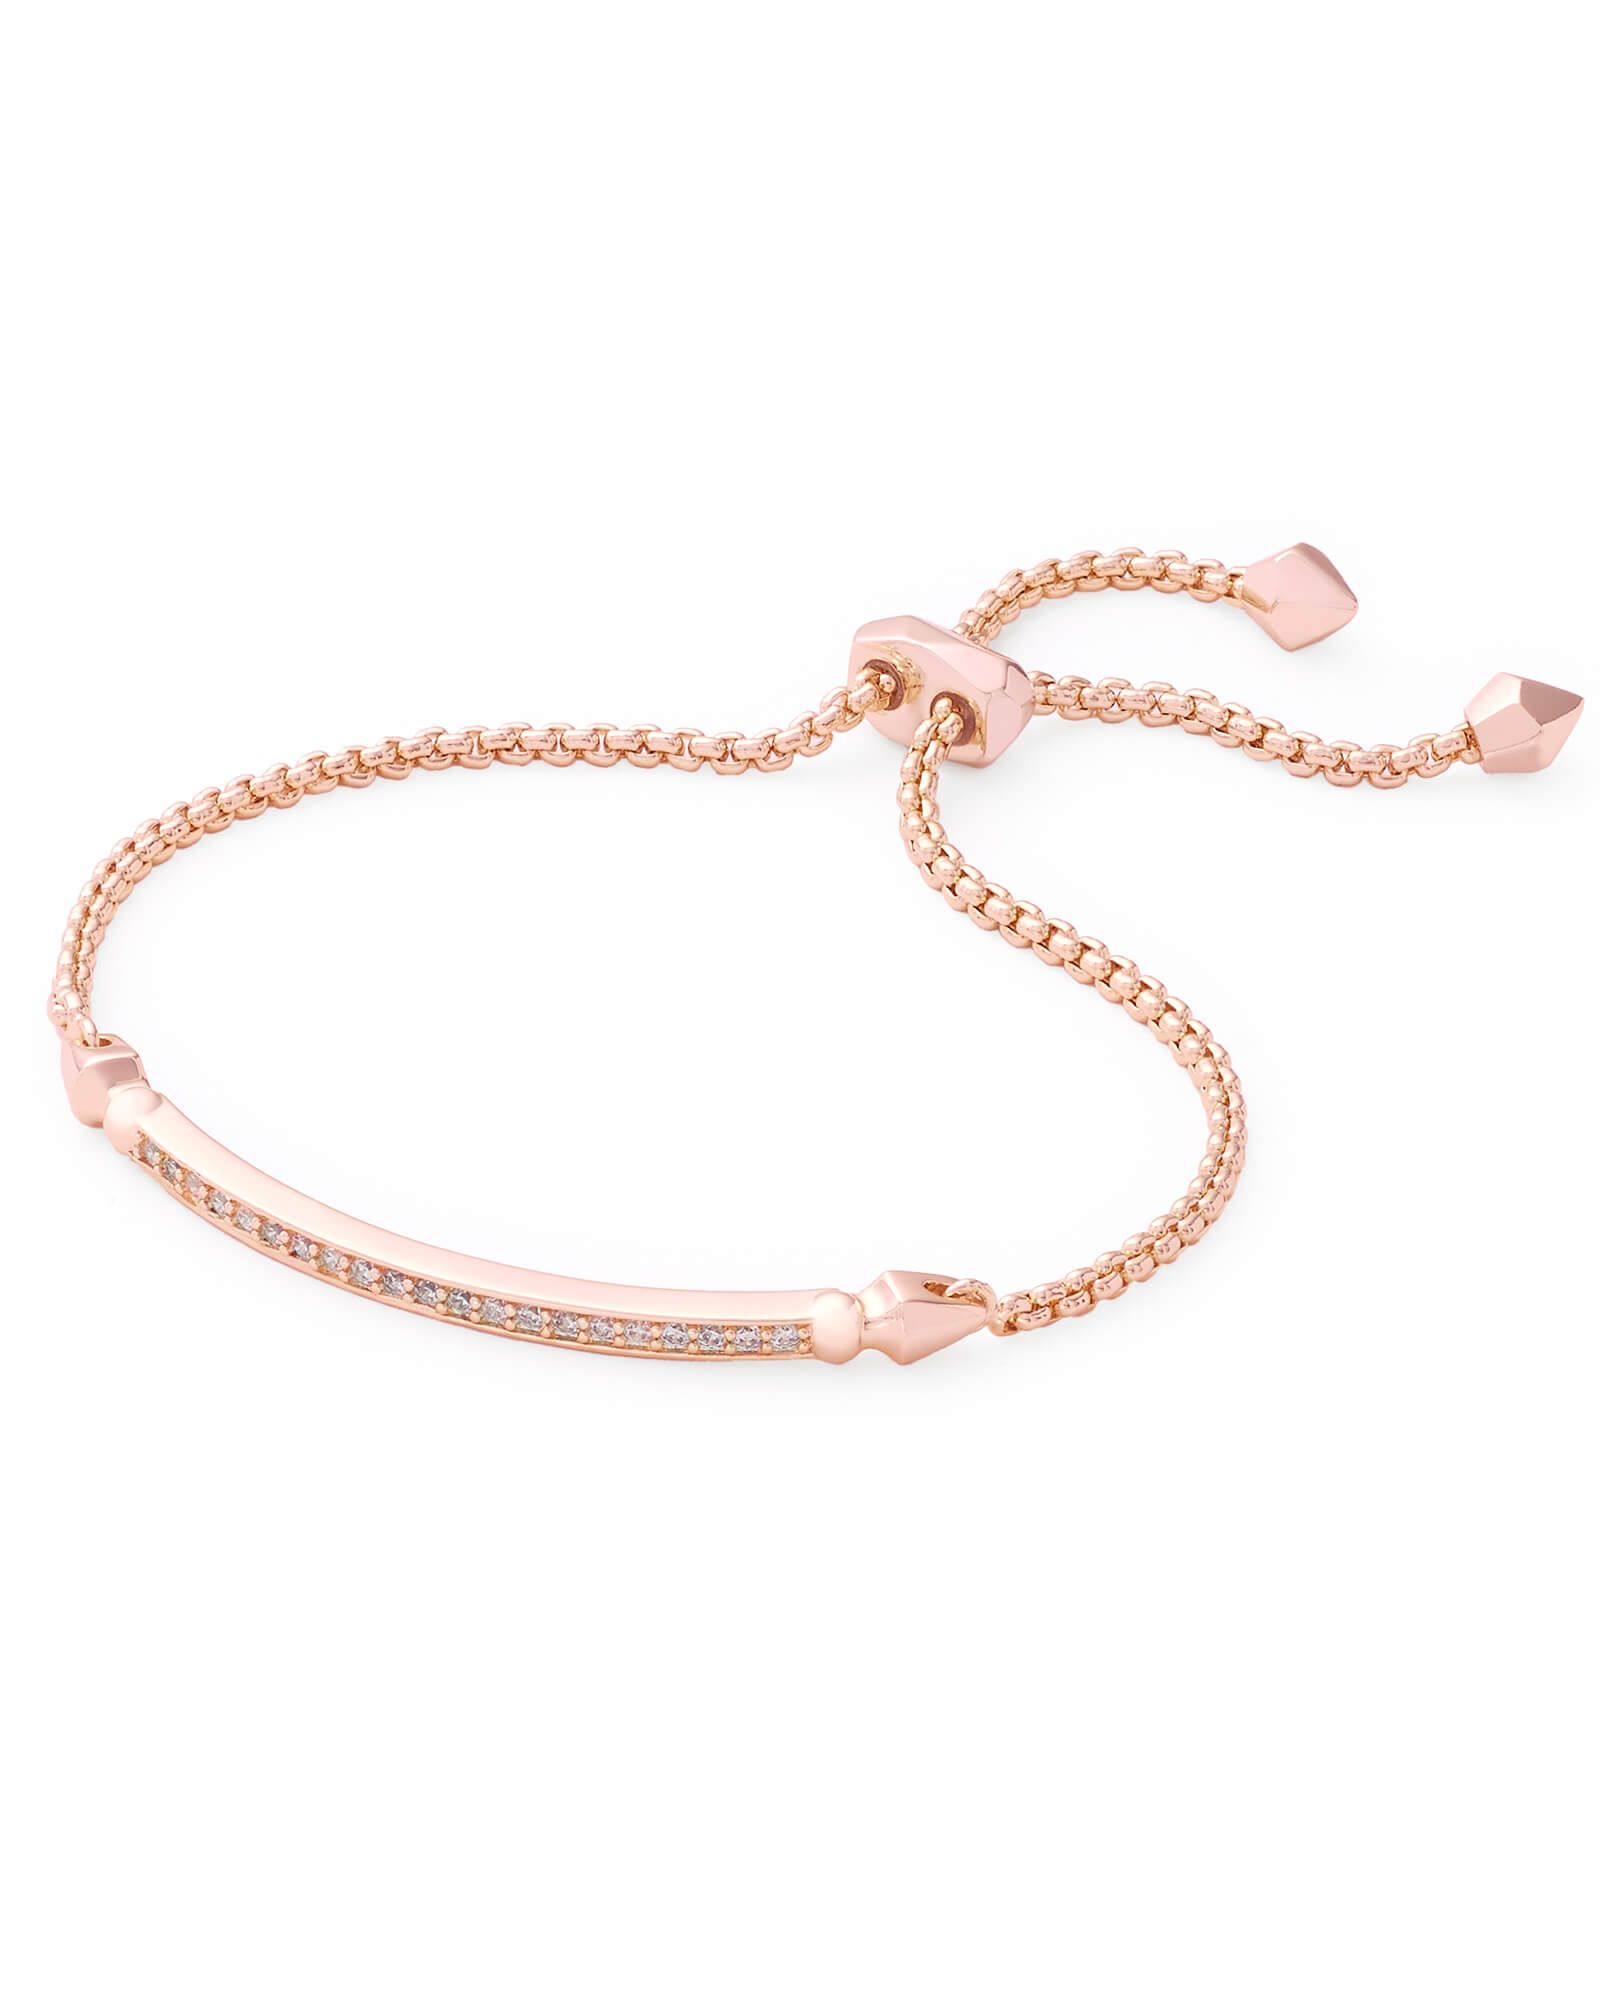 Ott Adjustable Chain Bracelet in Rose Gold | Kendra Scott | Kendra Scott